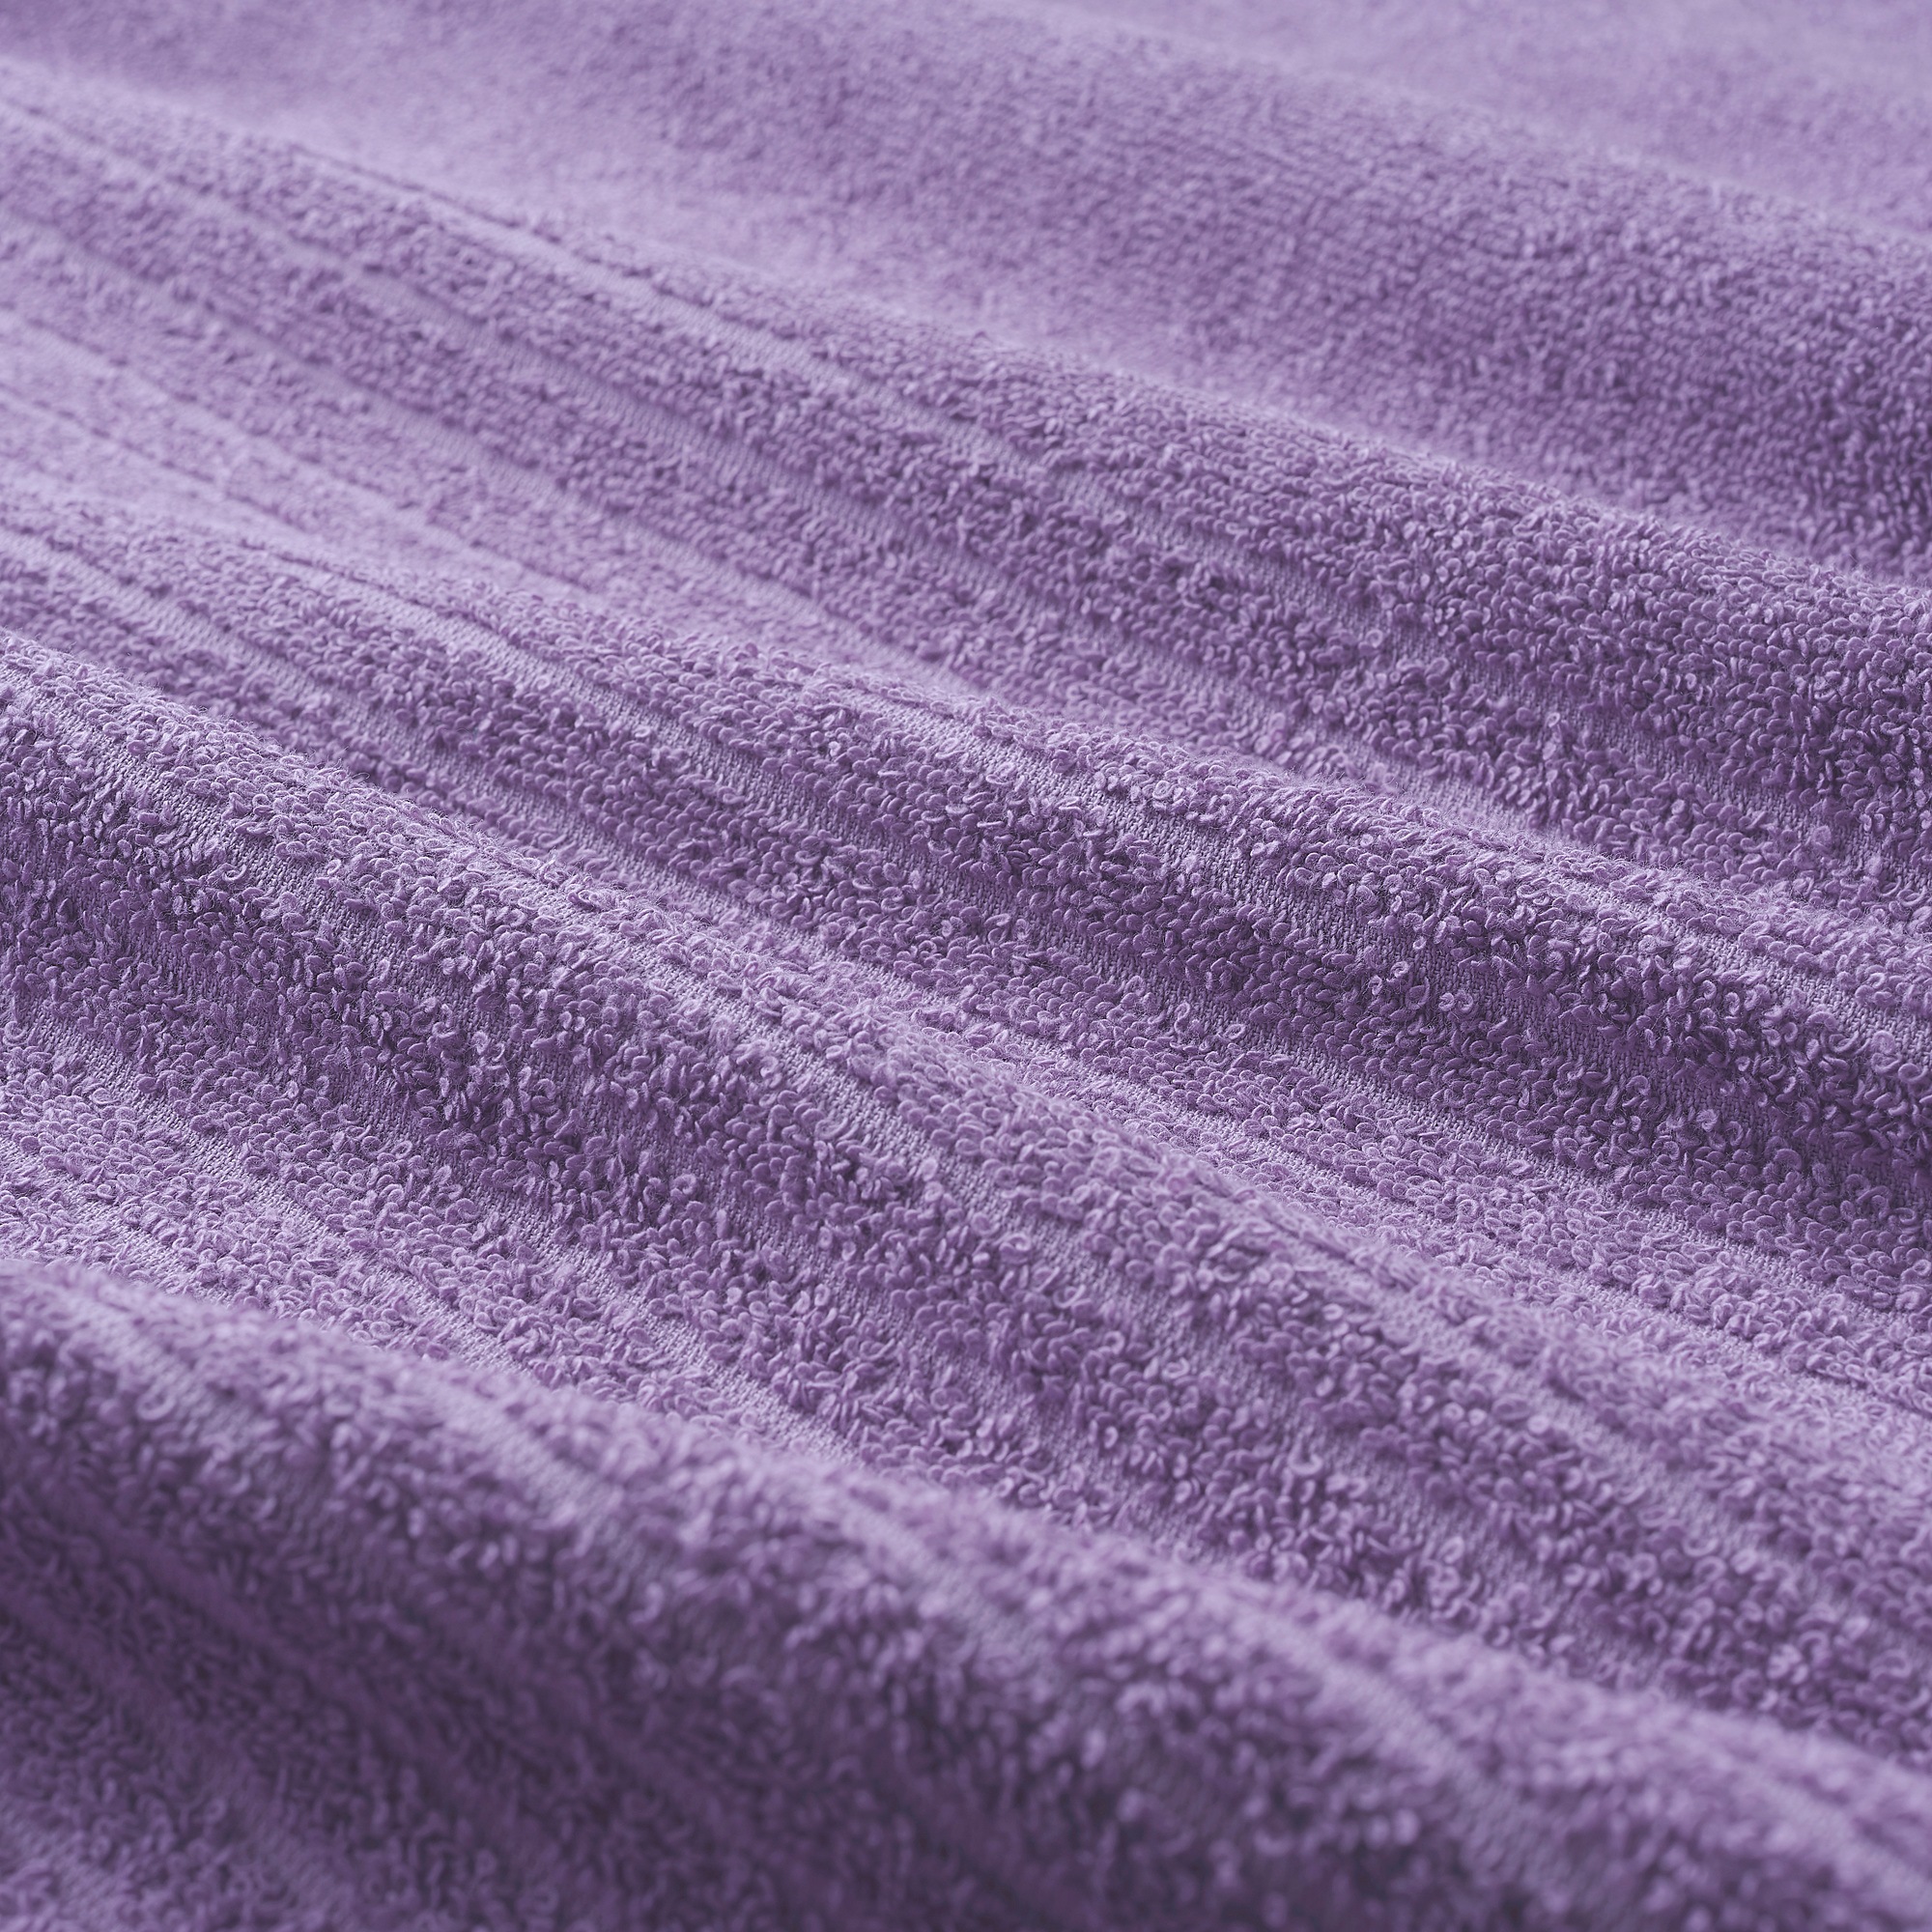 Фиолетовое полотенце. VÅGSJÖN полотенце 50x100 розовый. Сиреневые полотенца текстура. VÅGSJÖN полотенце светло-розовый.